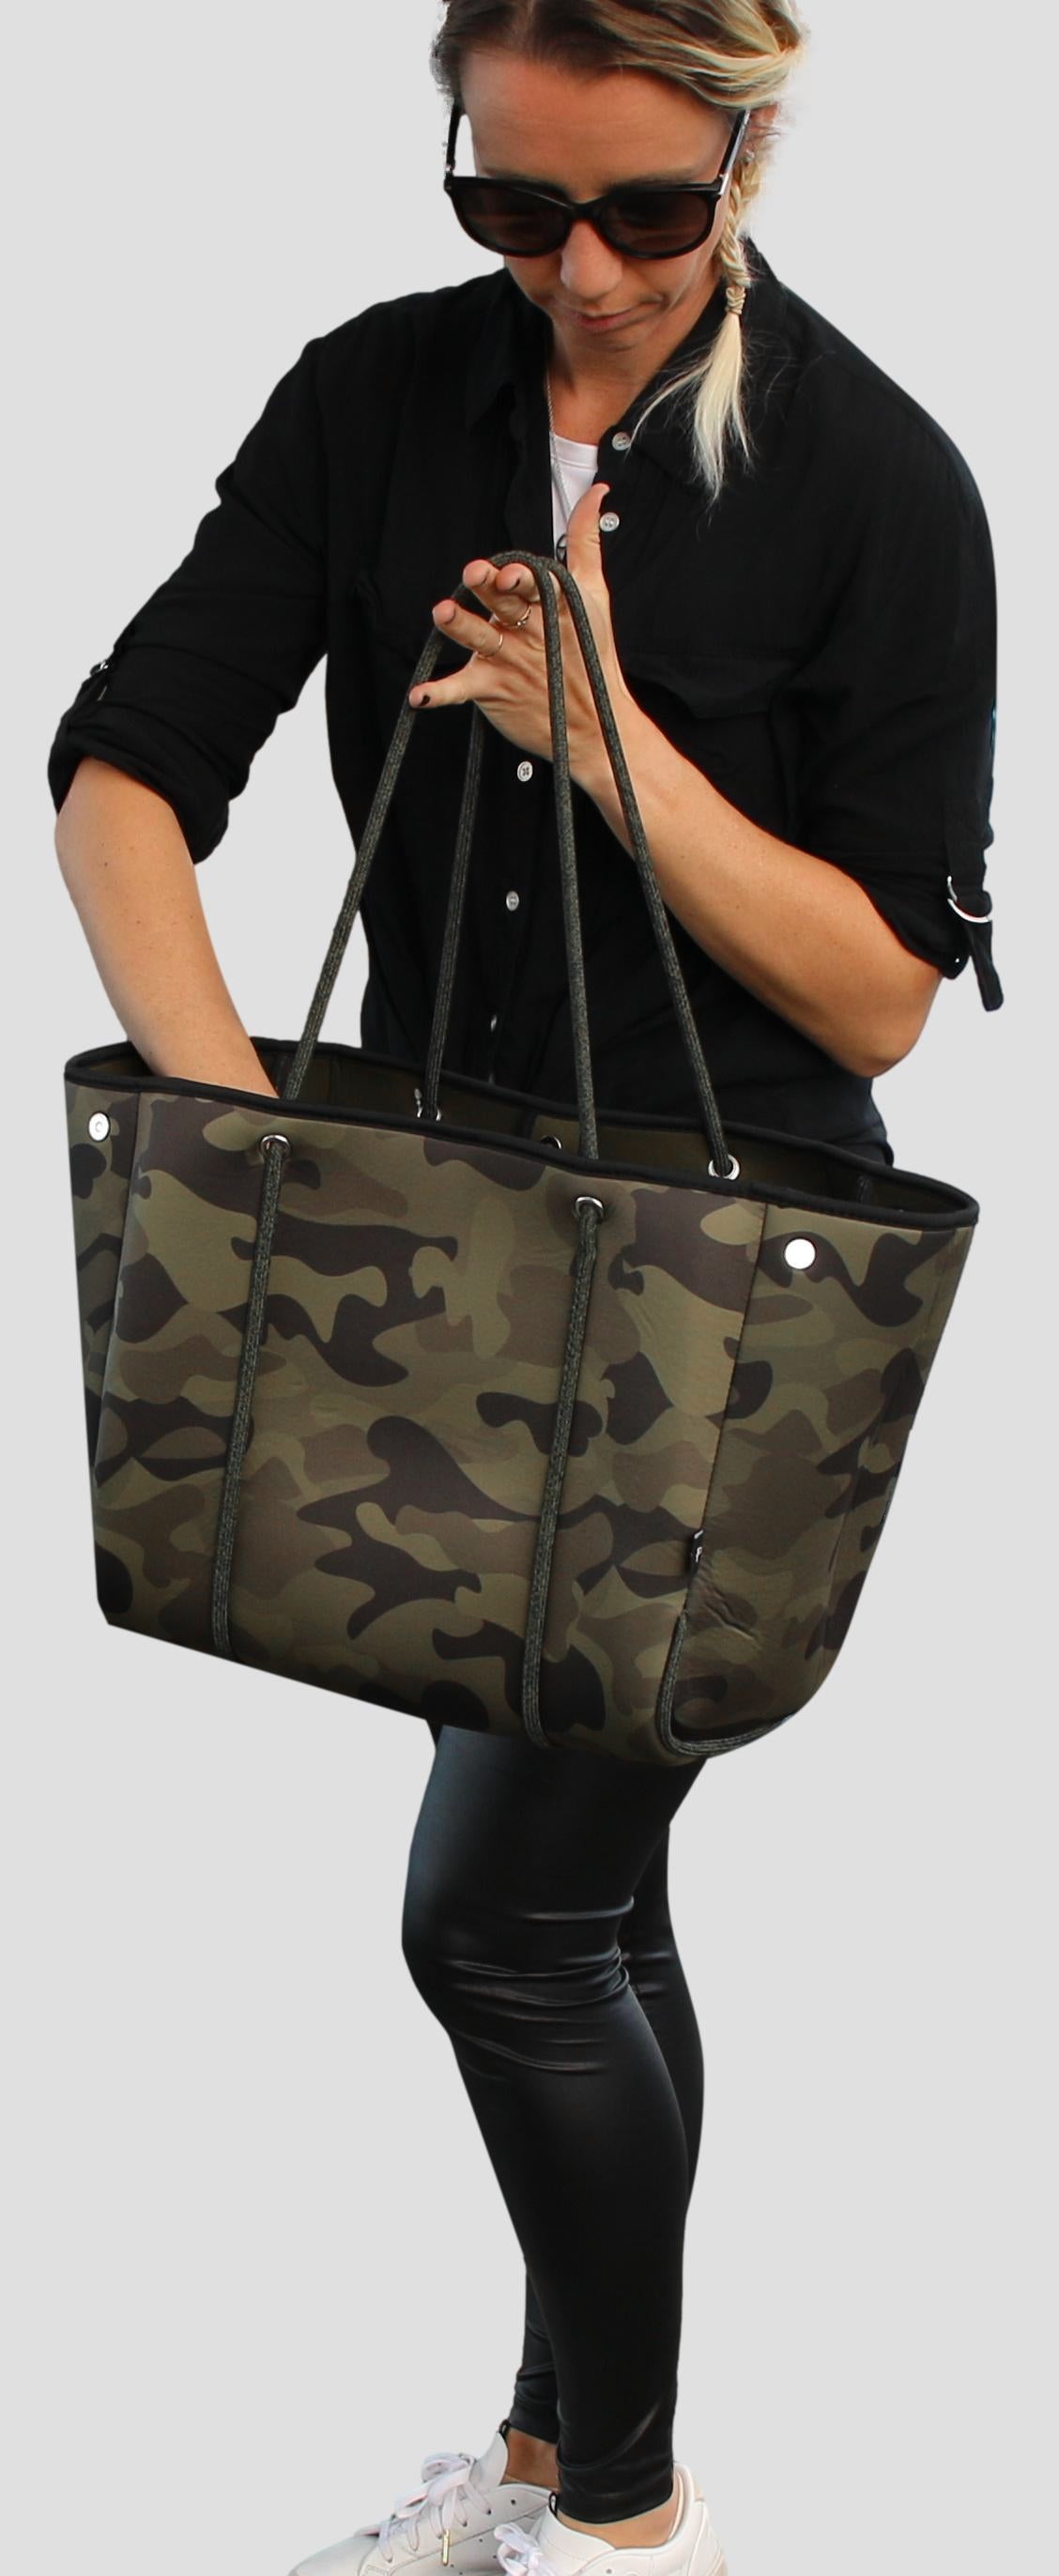 Michael Kors Grayson Green Camo Leather Satchel Handbag | eBay